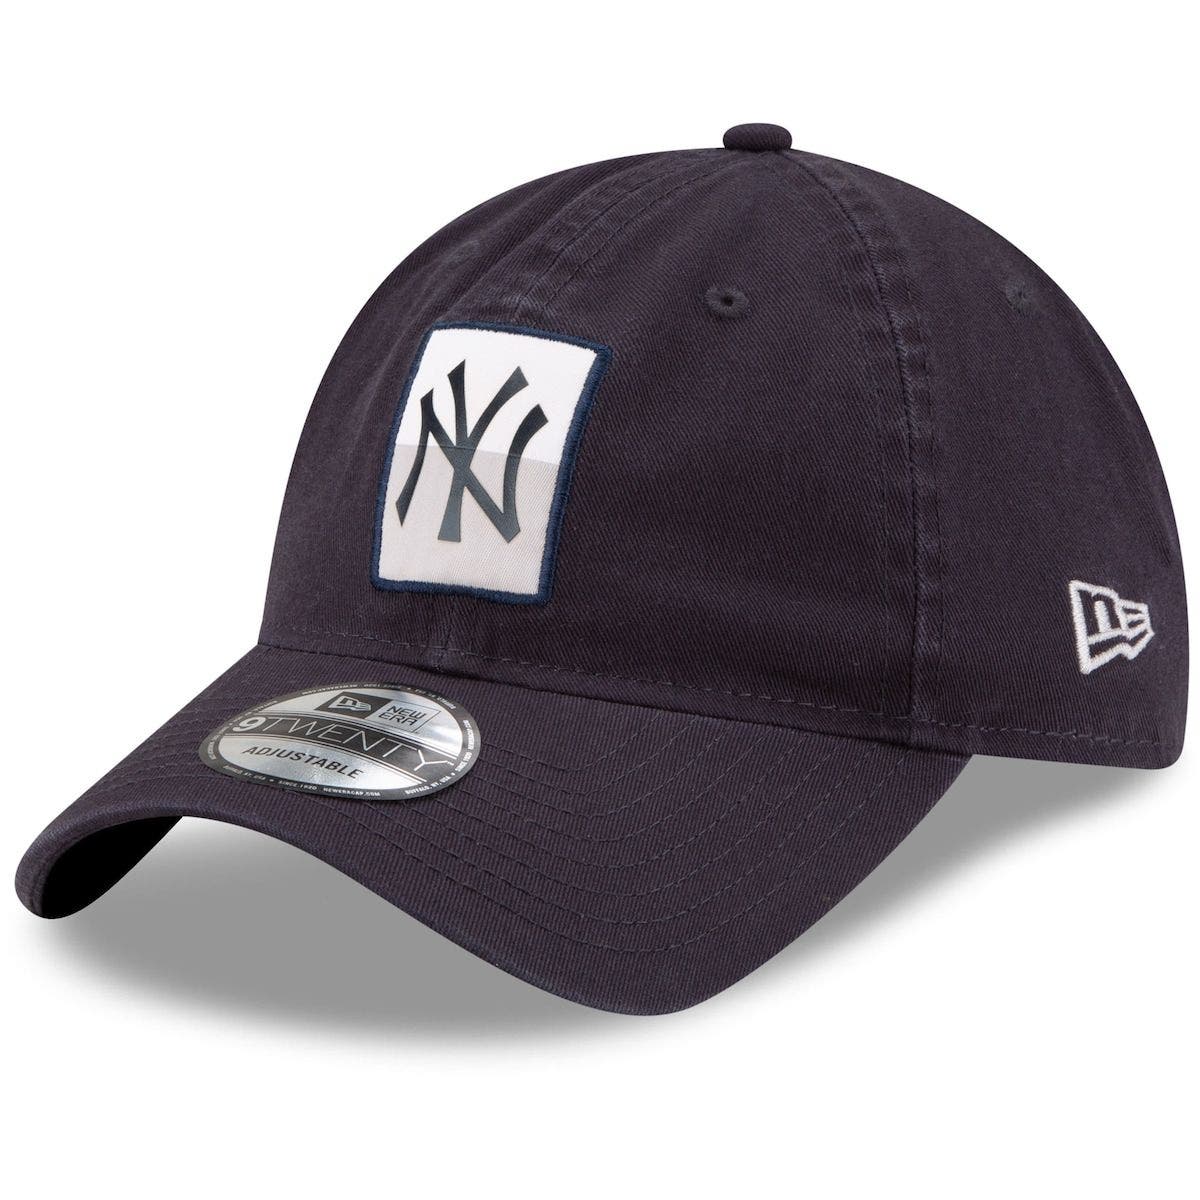 New Era New York Yankees Gray/Black Flow Team 9FIFTY Adjustable Snapback Hat 